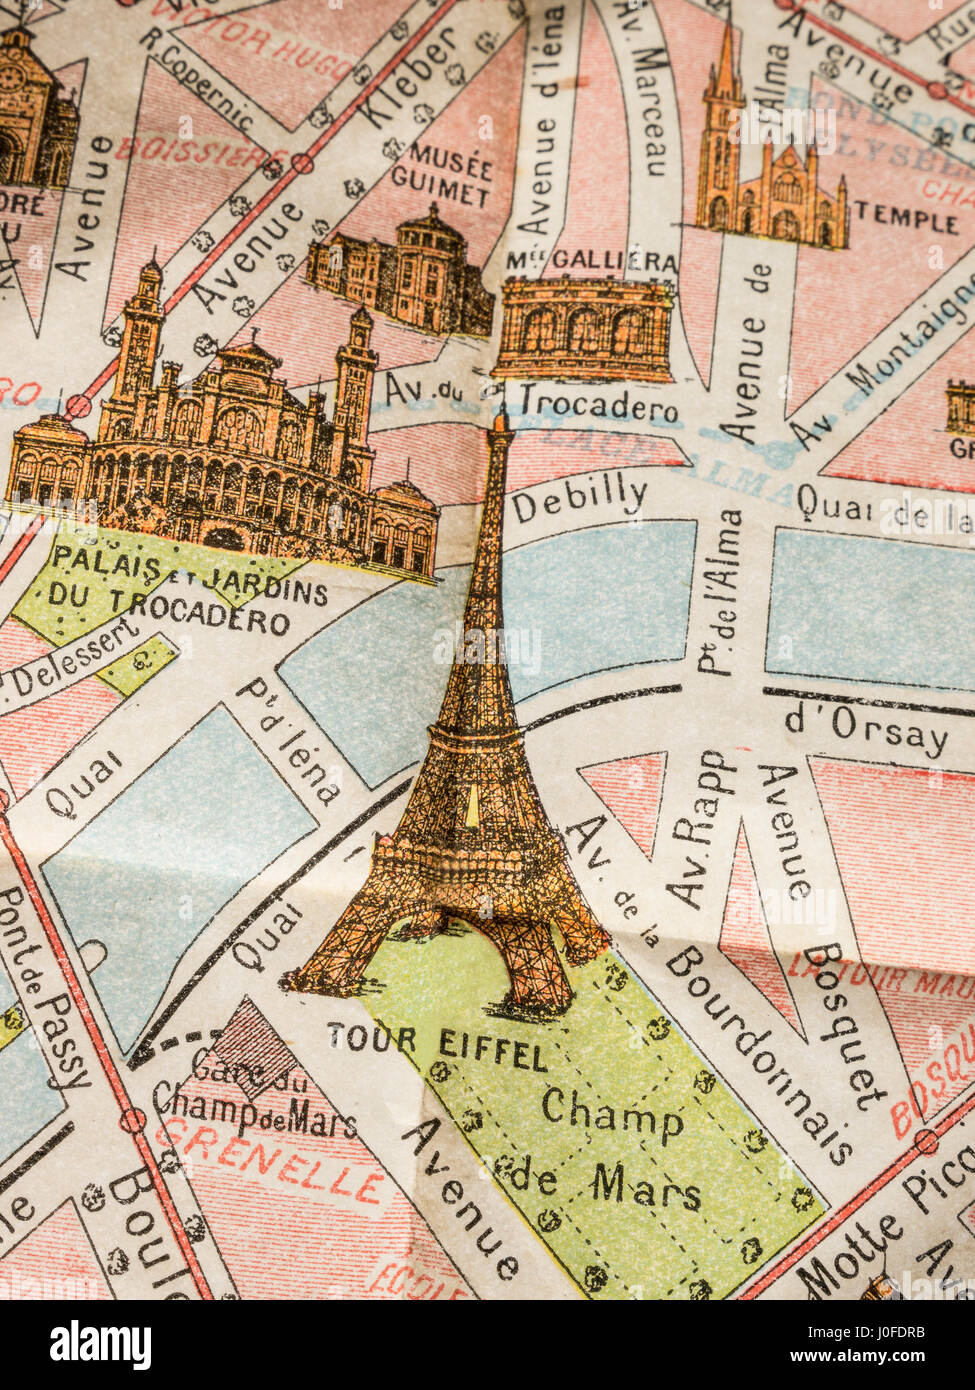 PARIGI VINTAGE RARE MAP DETAIL fine print detail of Rare 1900's vintage retrò color Mappa Monumentale di Parigi, con la Torre Eiffel e Trocadero ecc Foto Stock